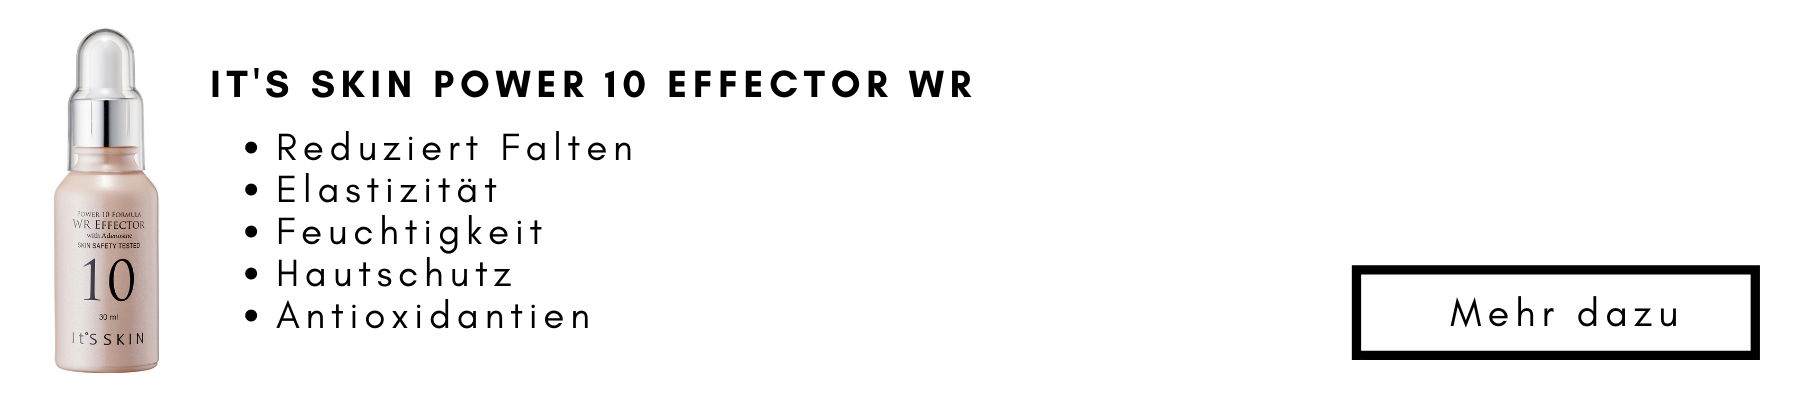 WR-Effector-Bild